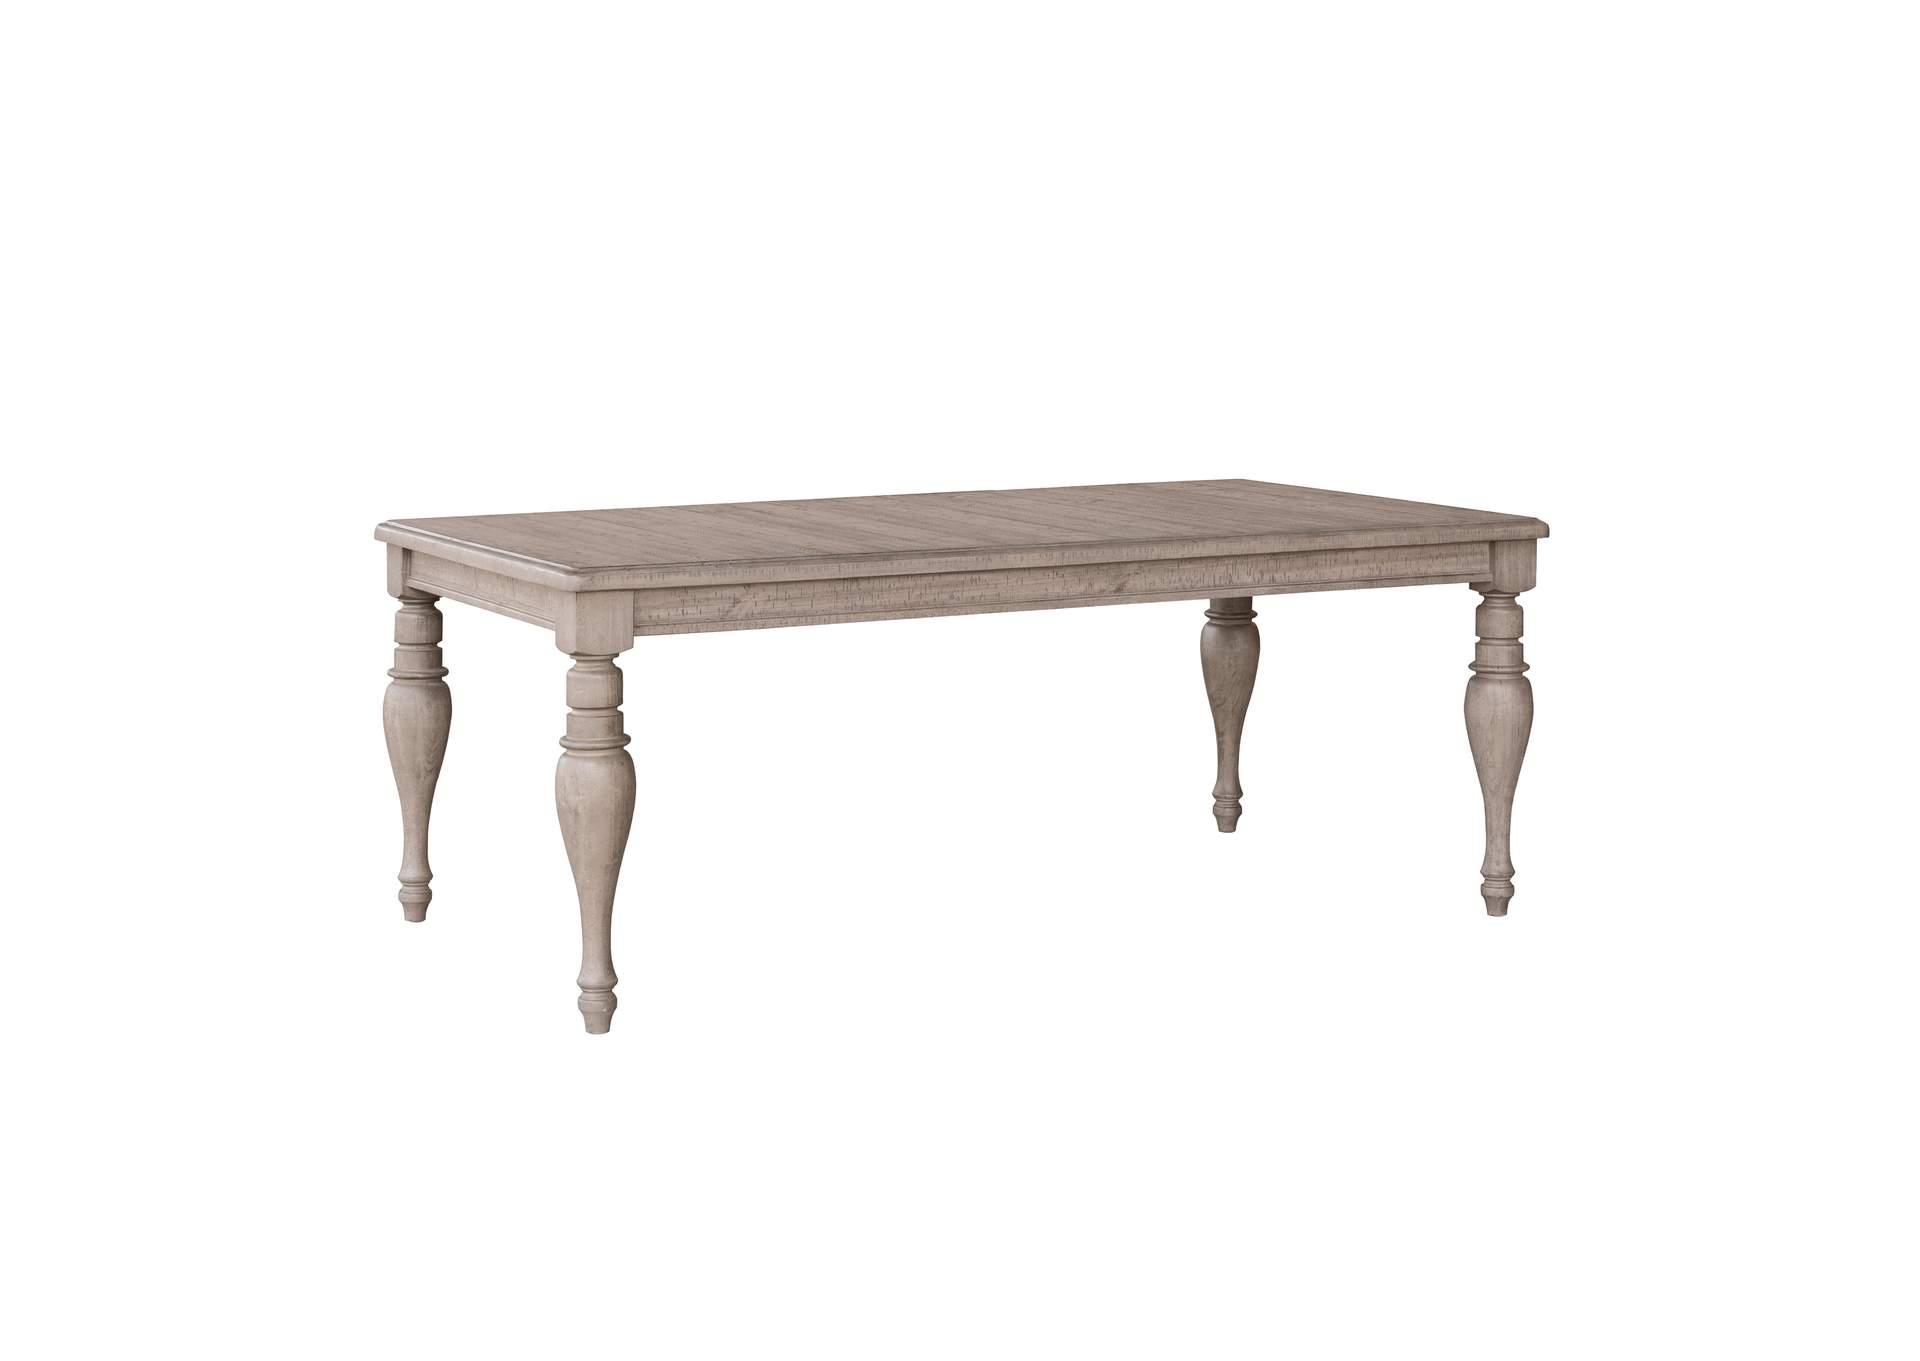 Danbury Leg Table,Pulaski Furniture